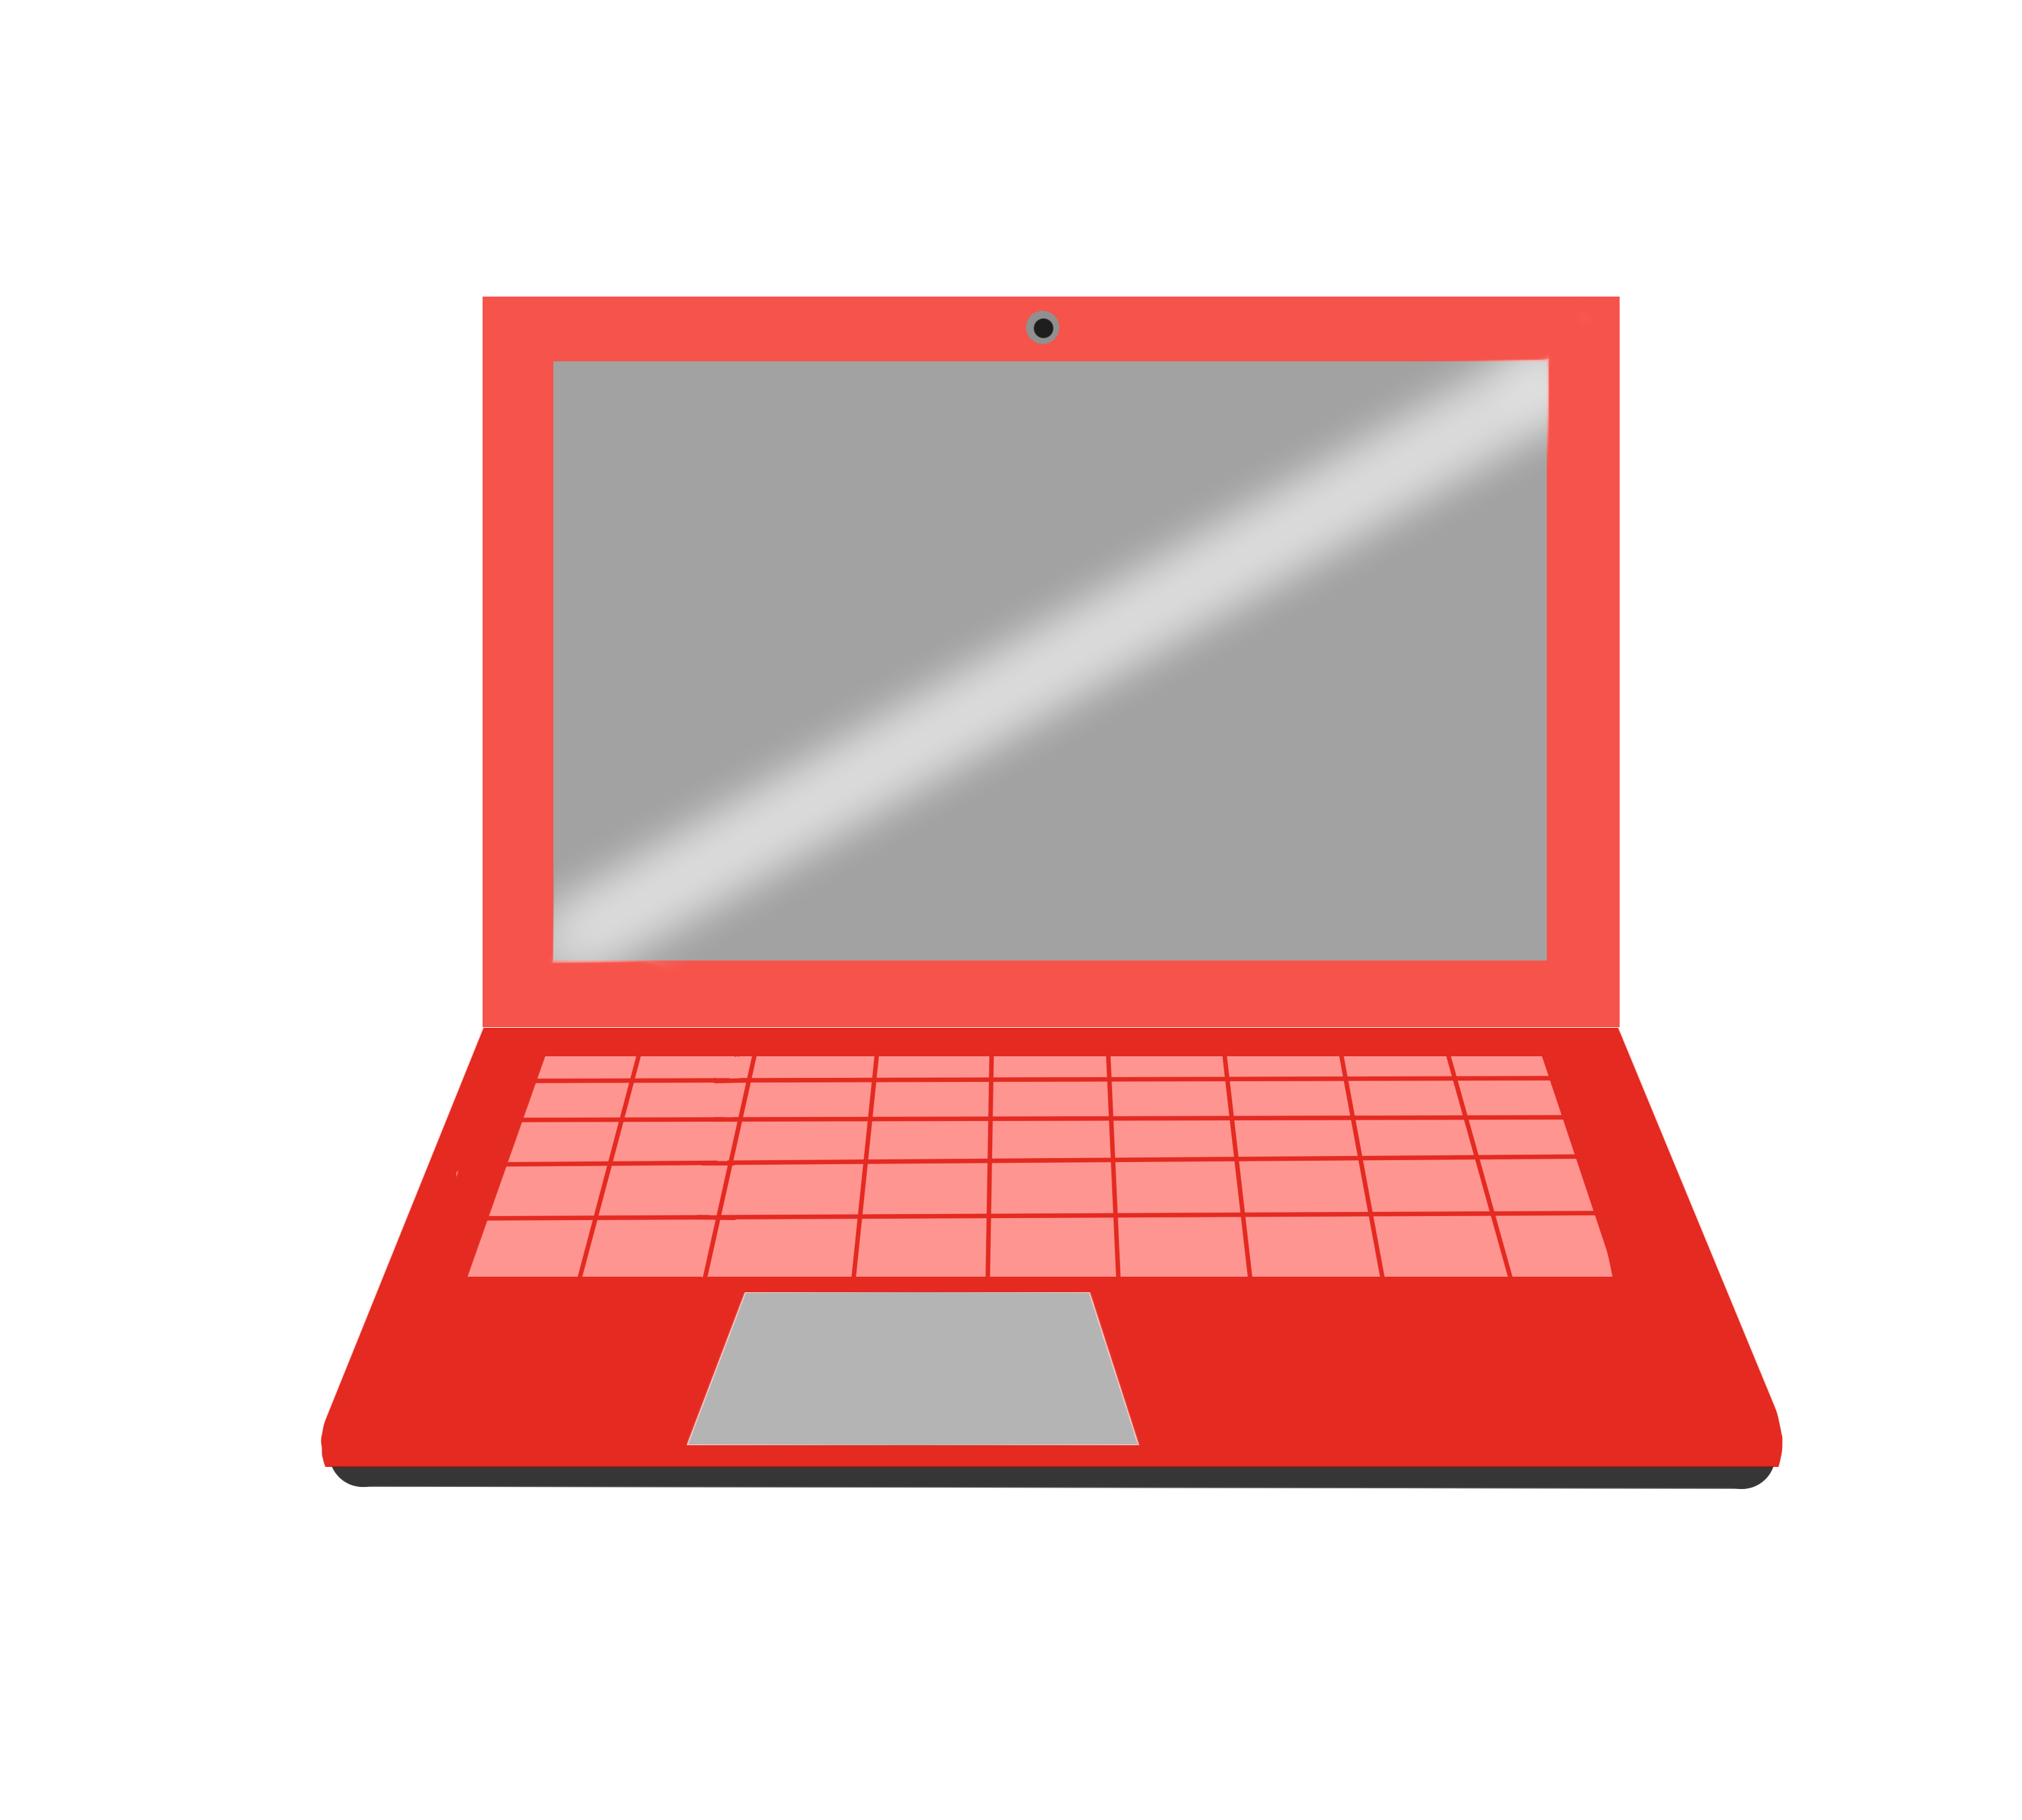 —Pngtree—cartoon red laptop_4560453 (1)